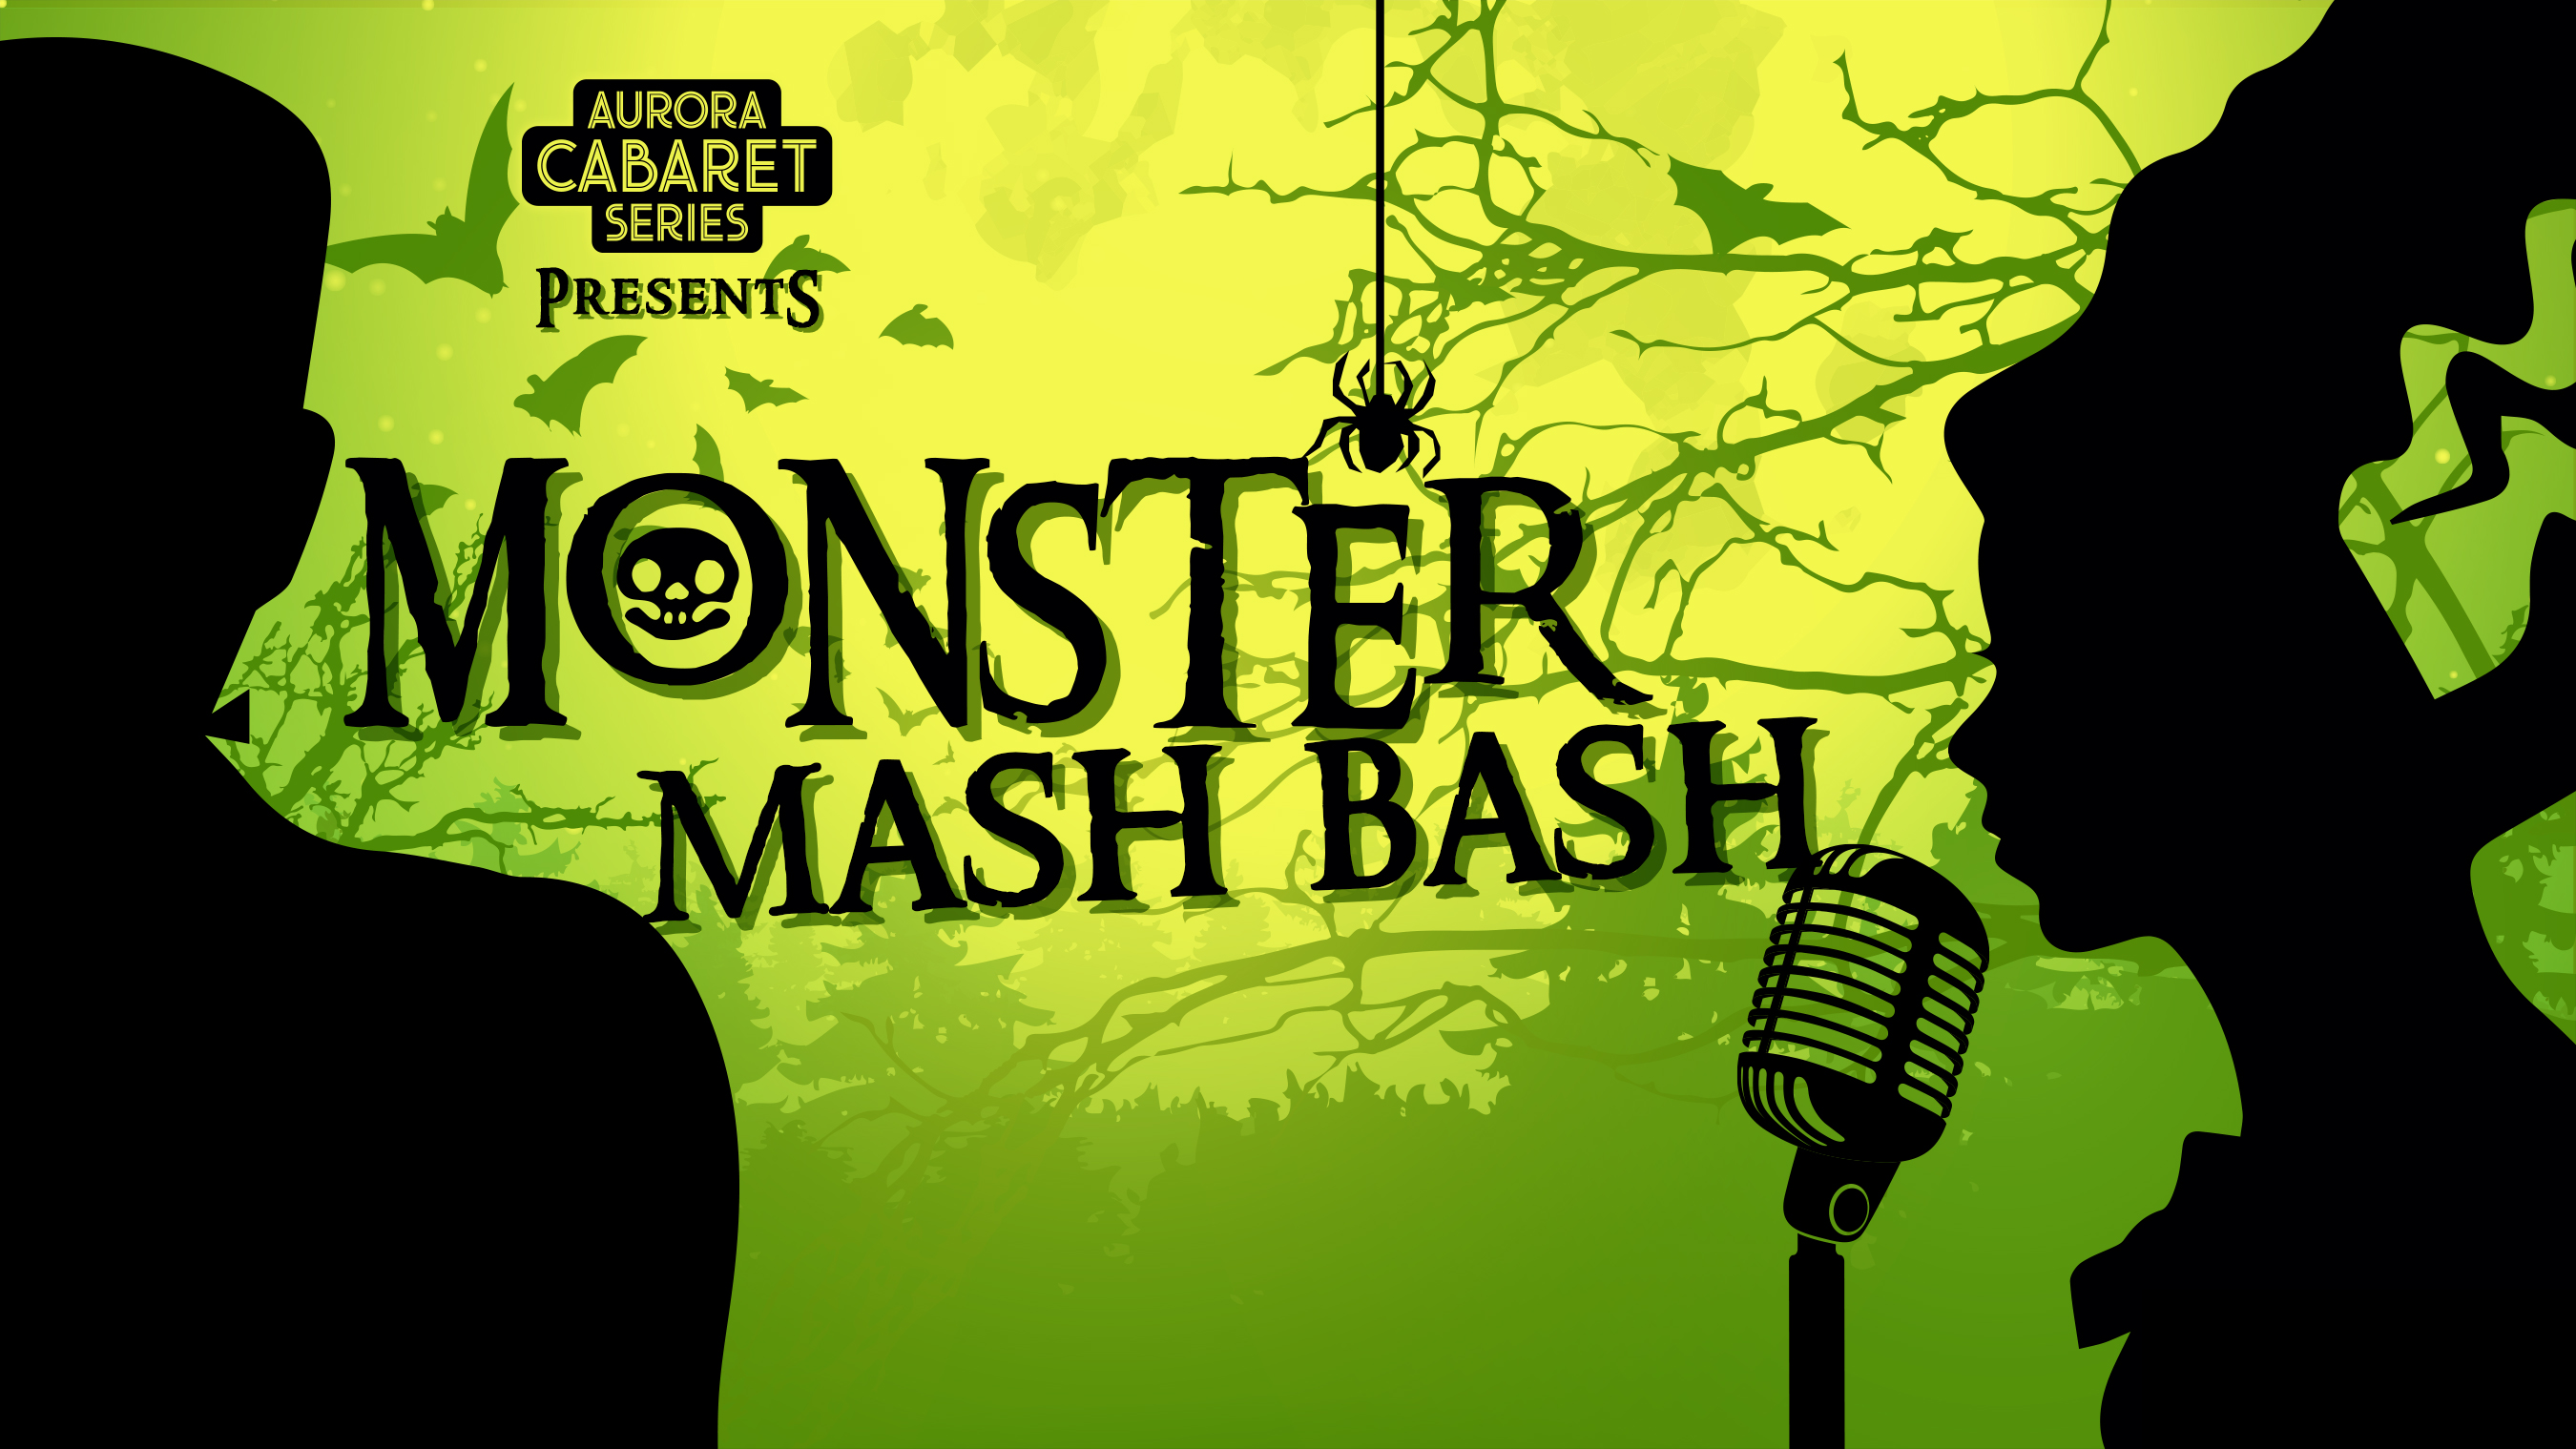 Monster Mash Bash Cabaret Aurora Theatre